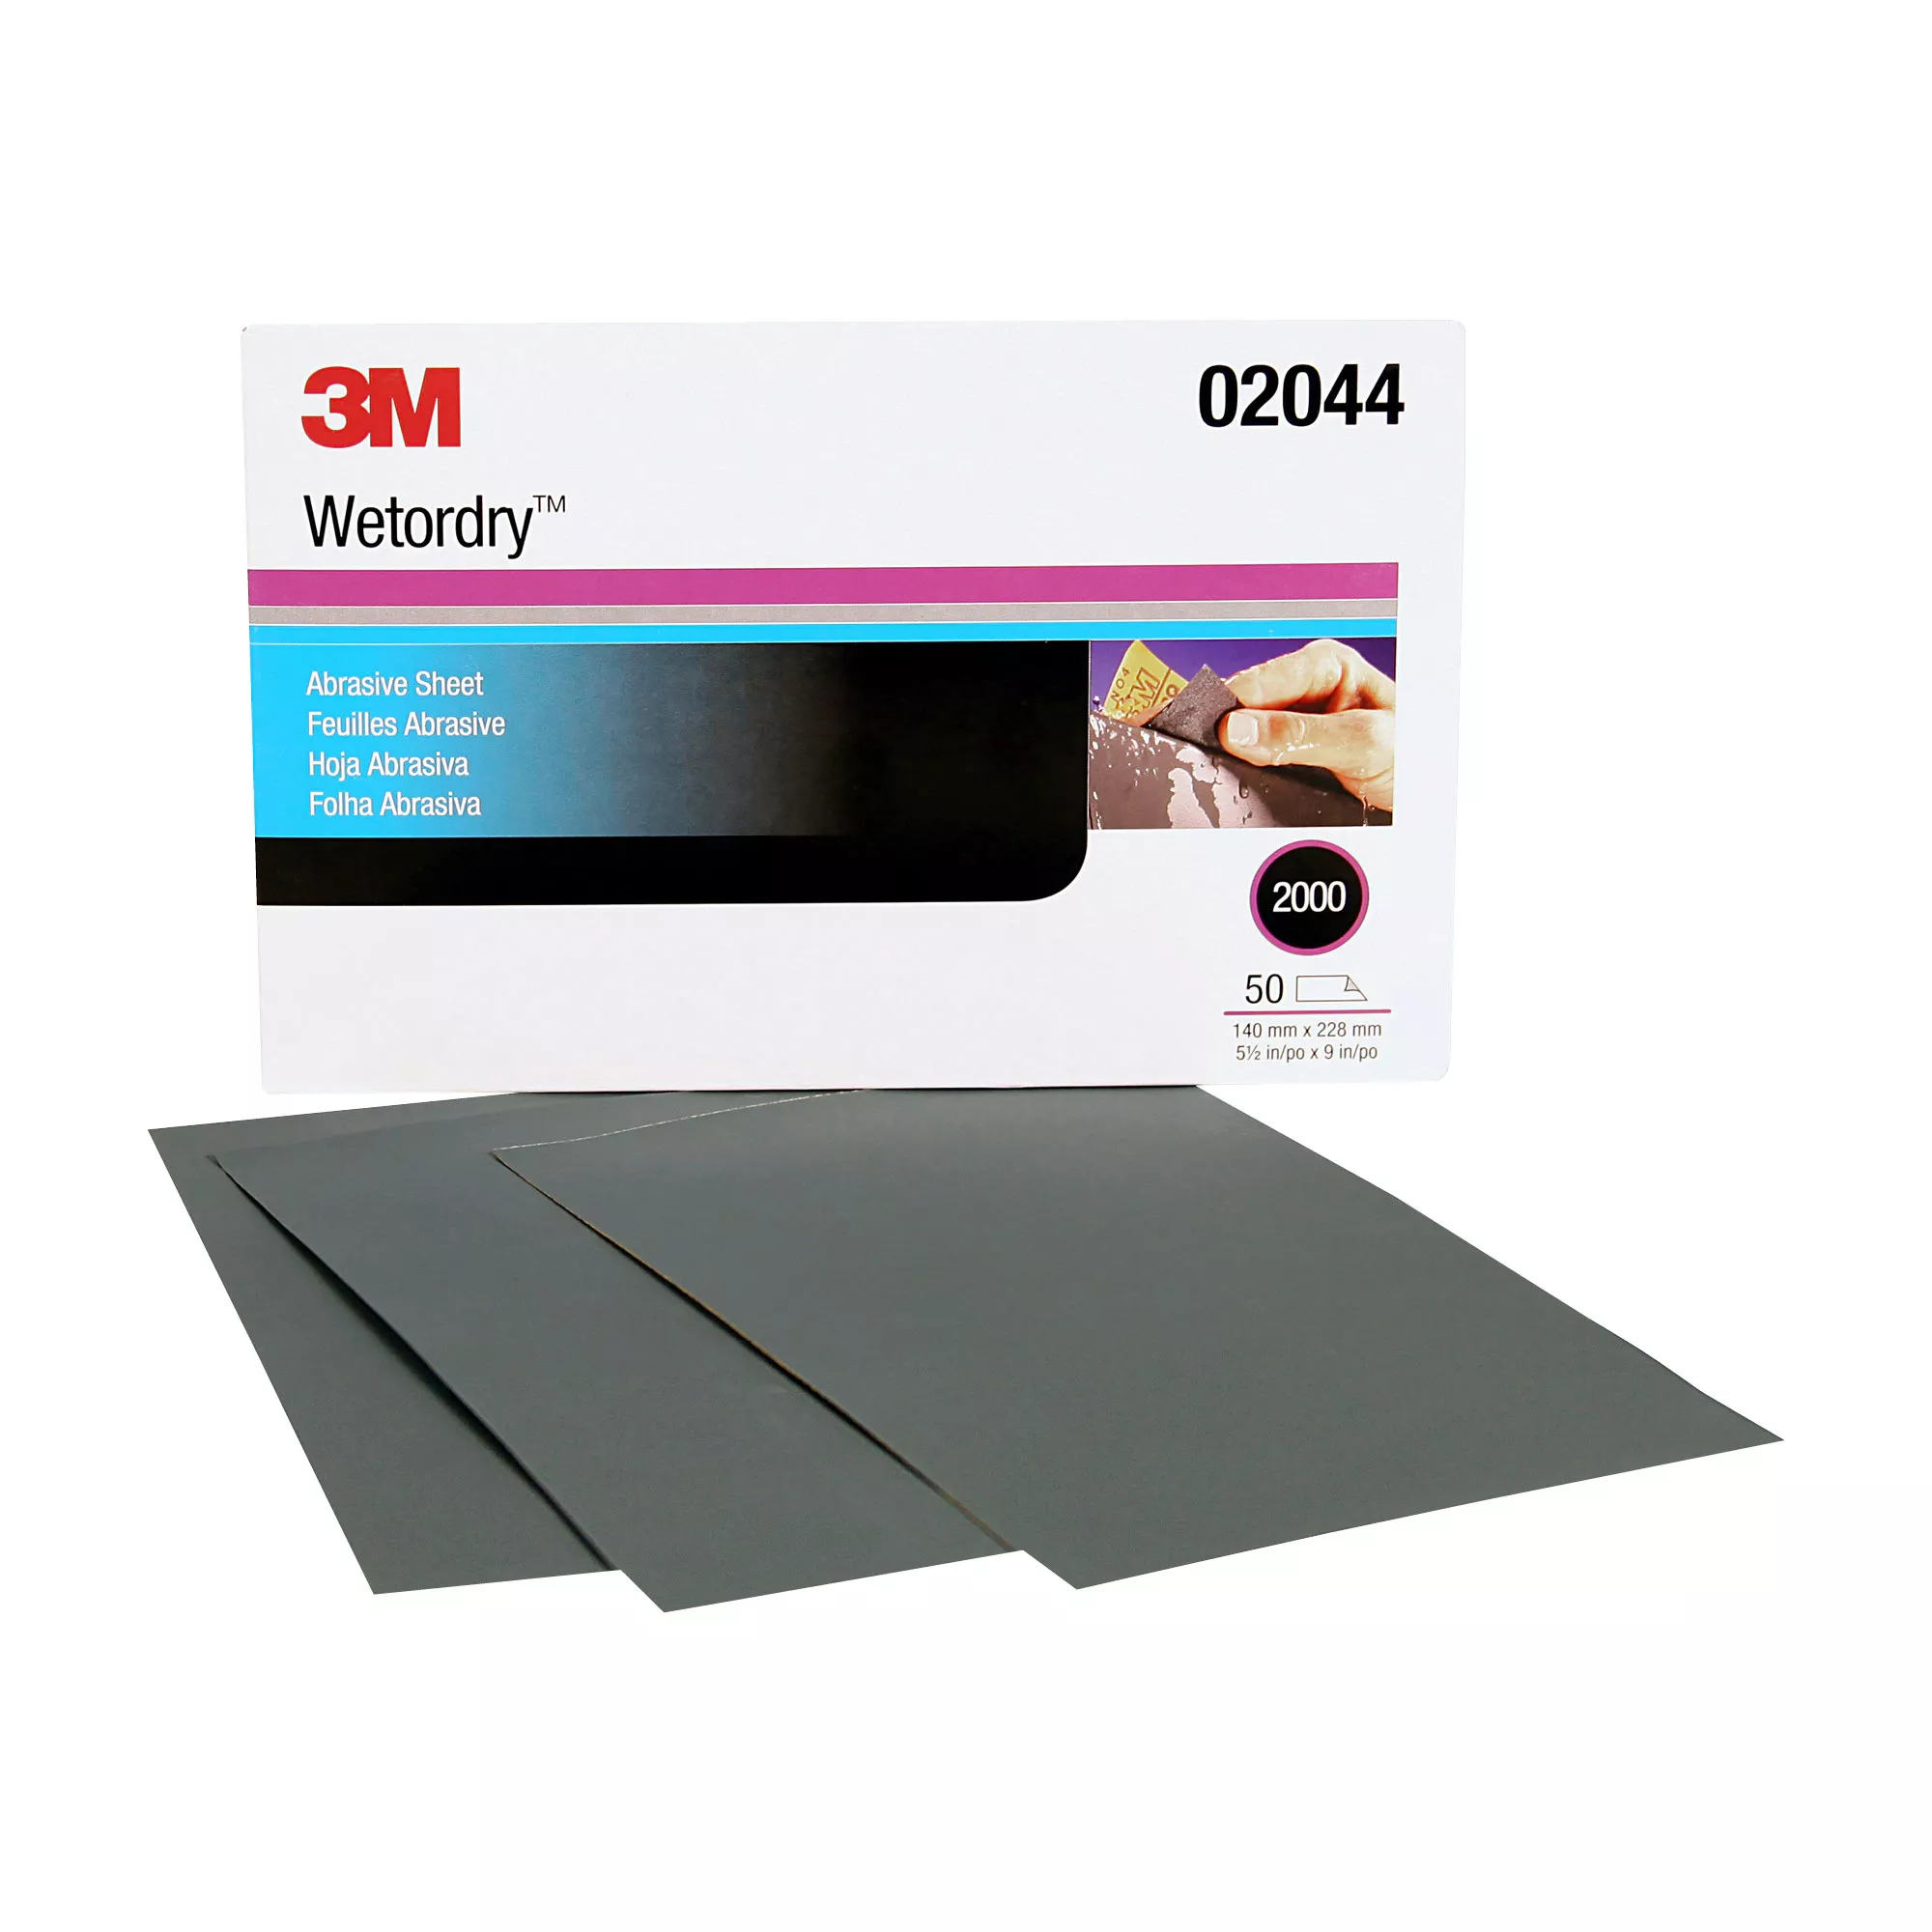 SKU 7000028328 | 3M™ Wetordry™ Abrasive Sheet 401Q